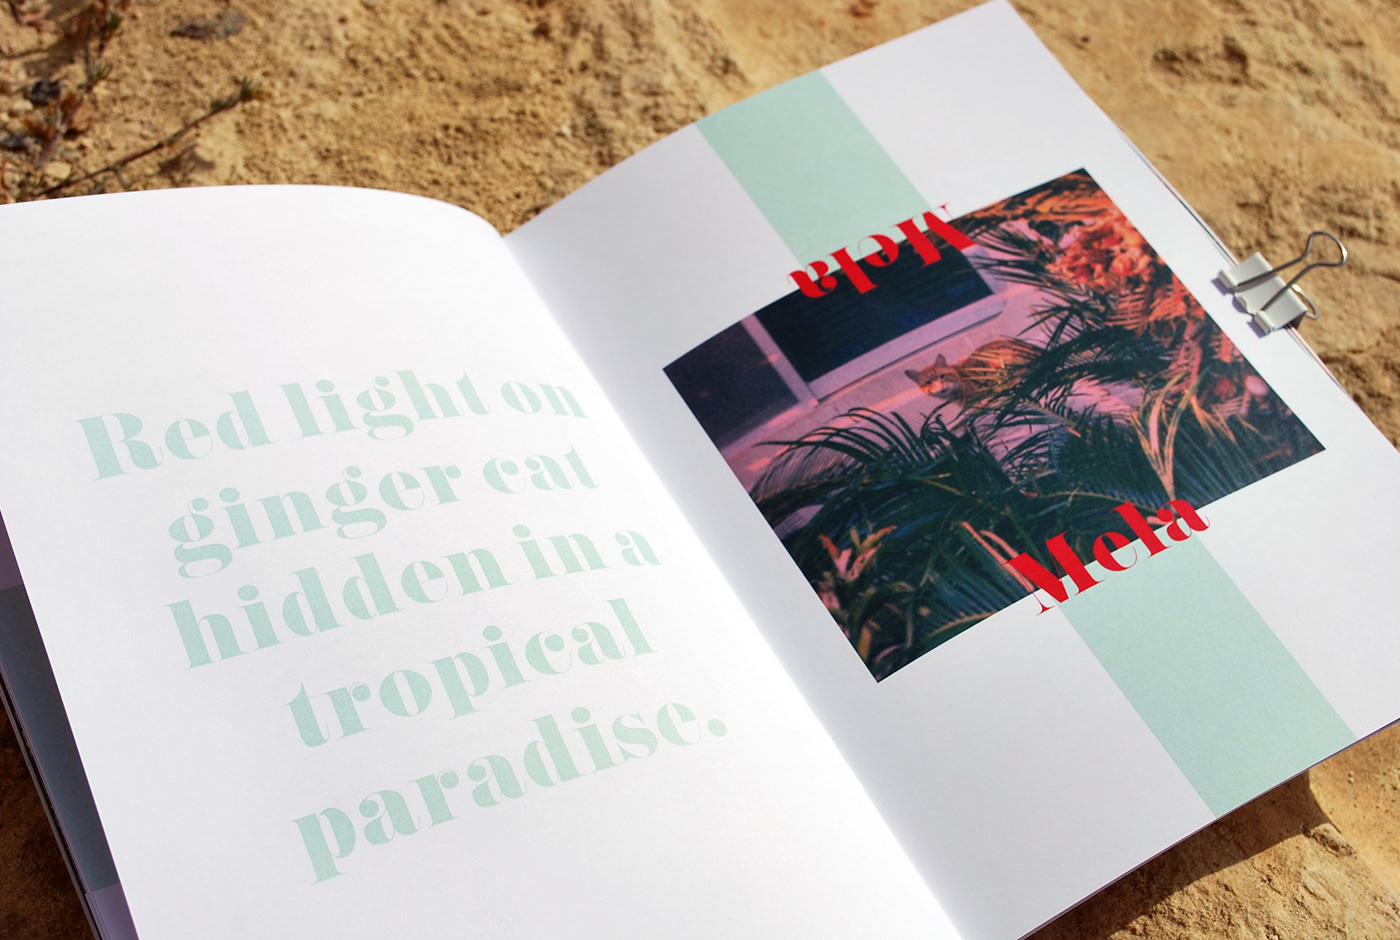 malta edition editorial book fanzine graphic design  art direction  Photography  design